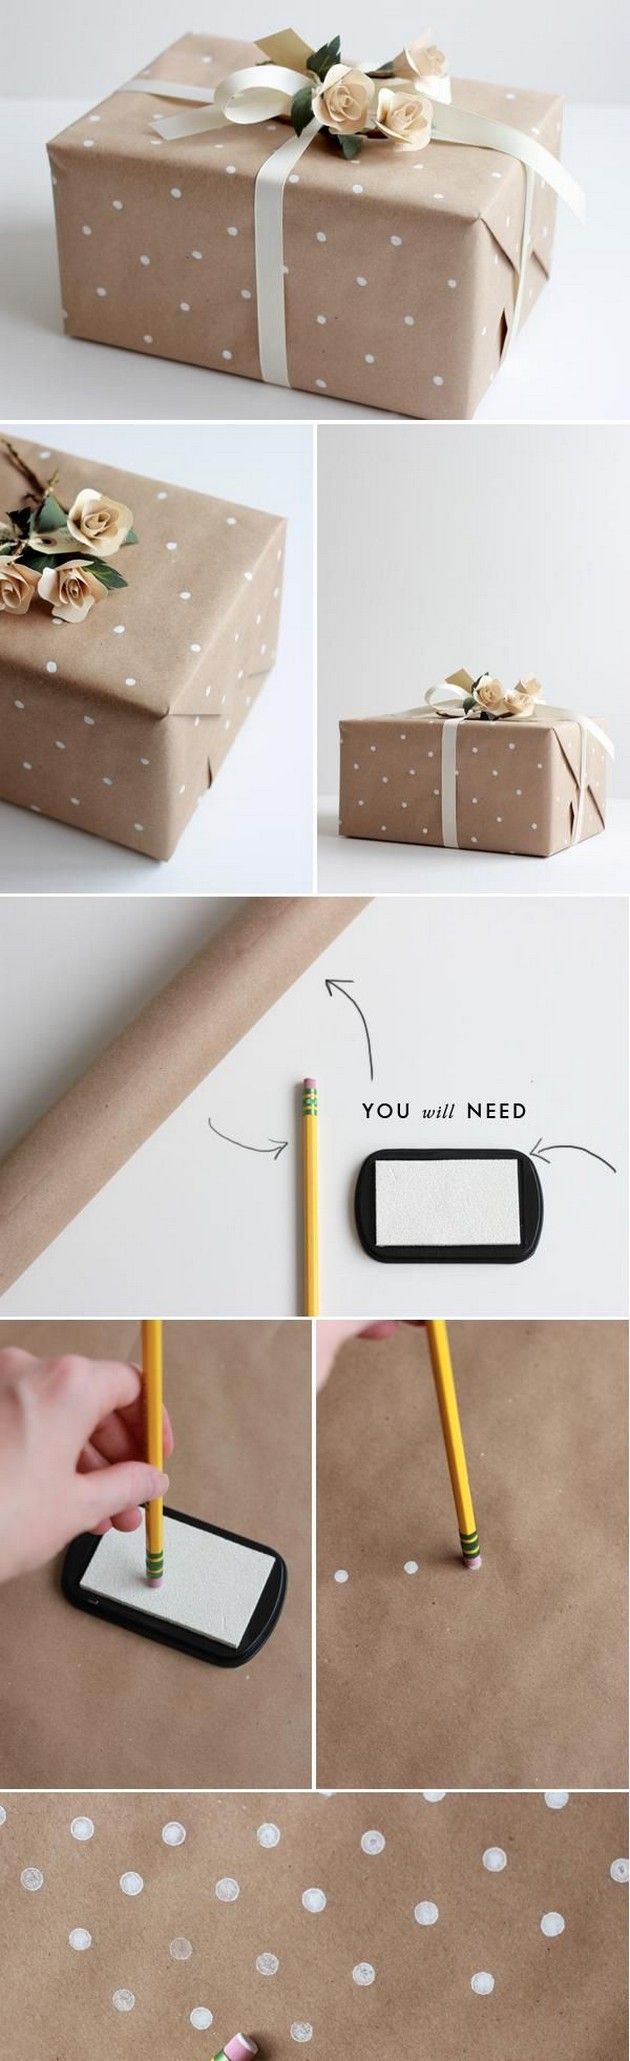 DIY Gift wrap ideas